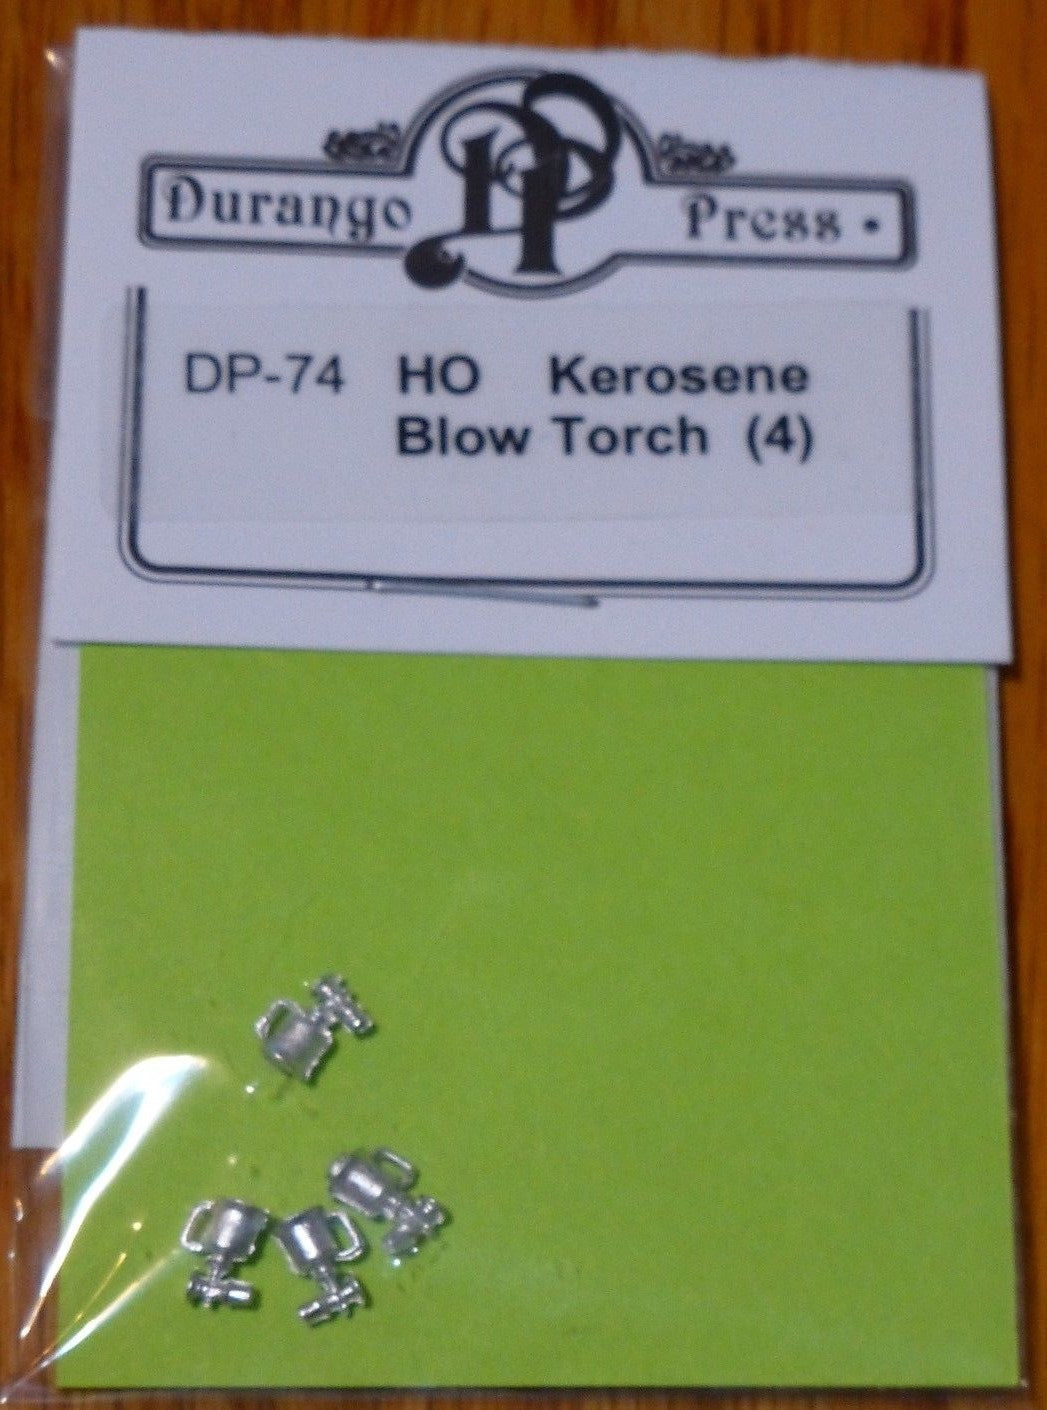 Durango Press 74 Ho Kerosene Style Blow Torch